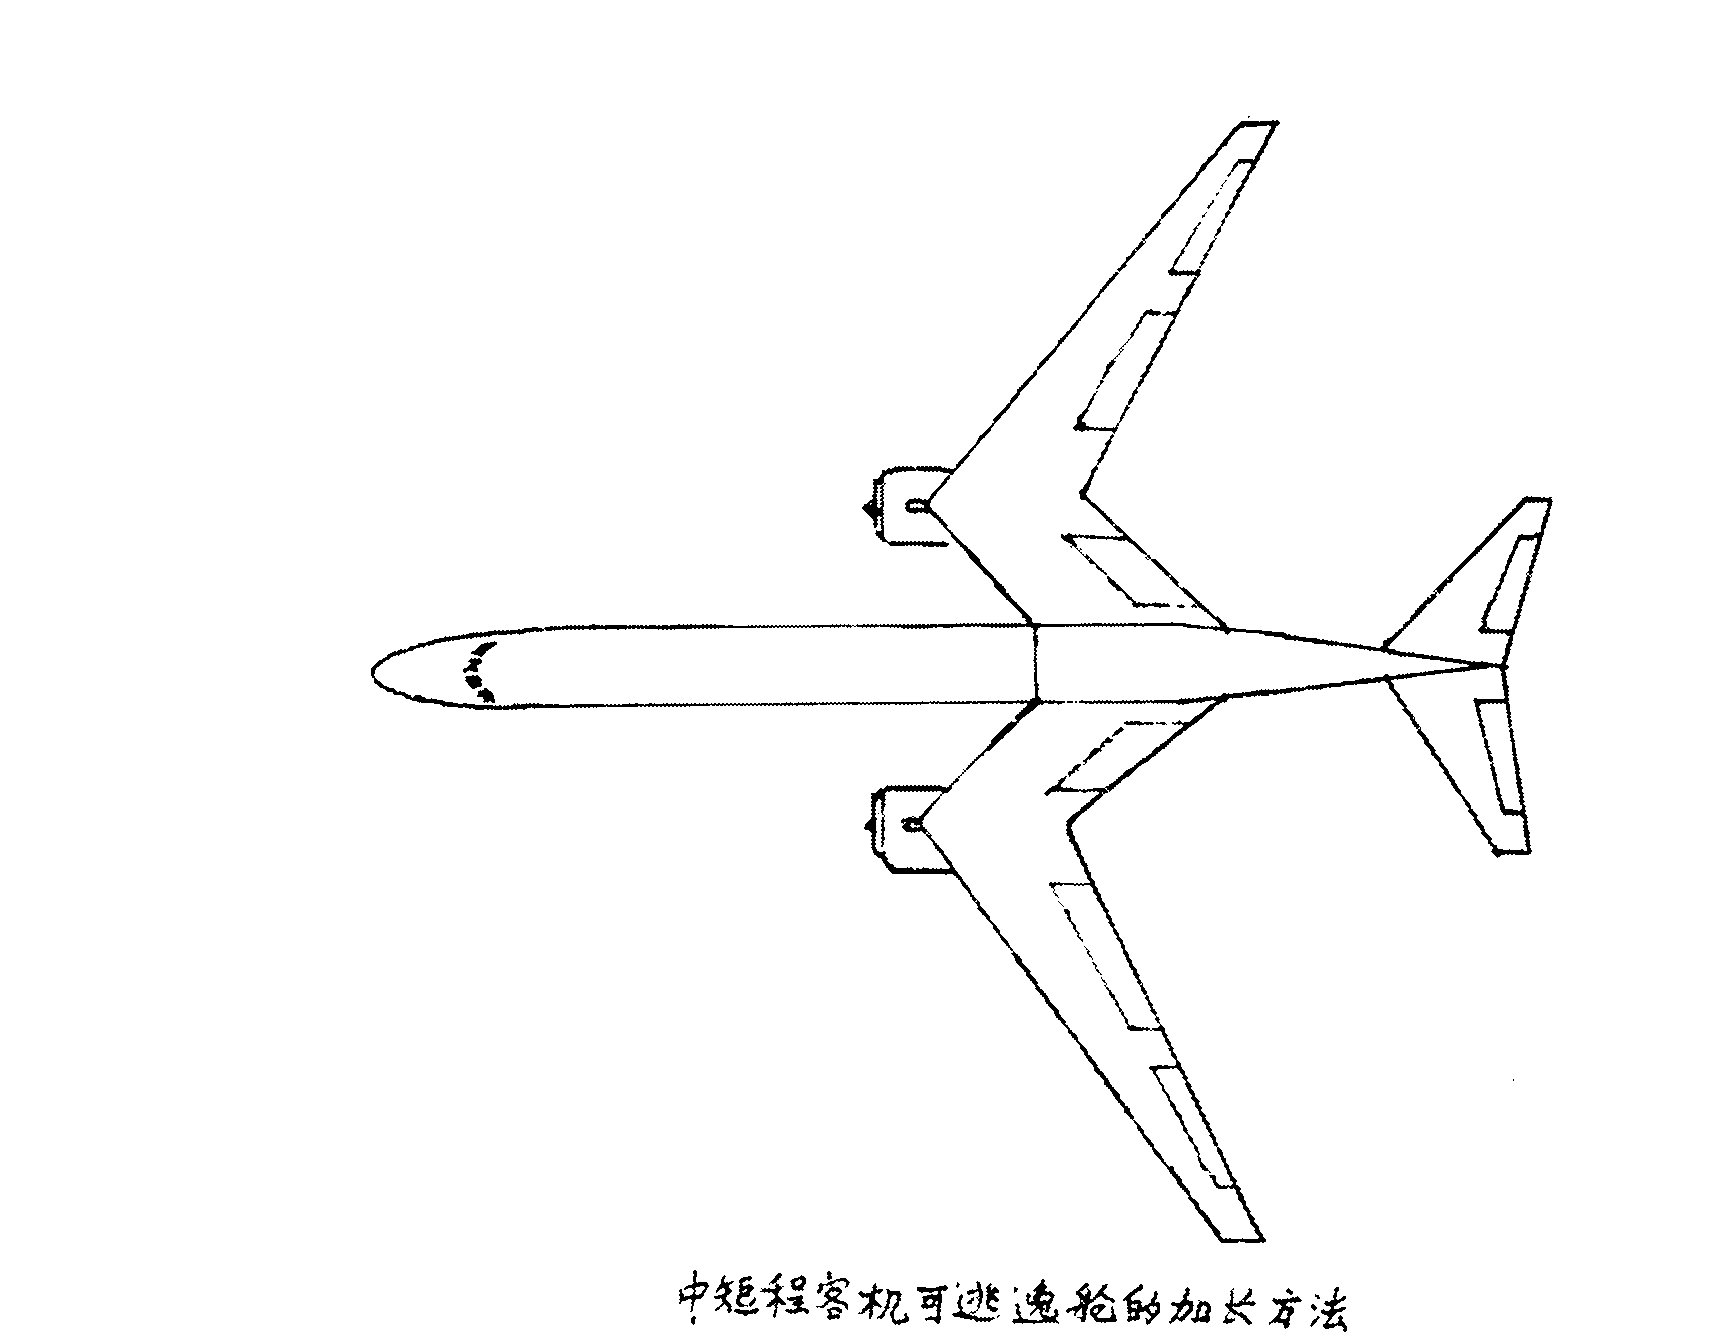 Passenger cabin-separable aircraft